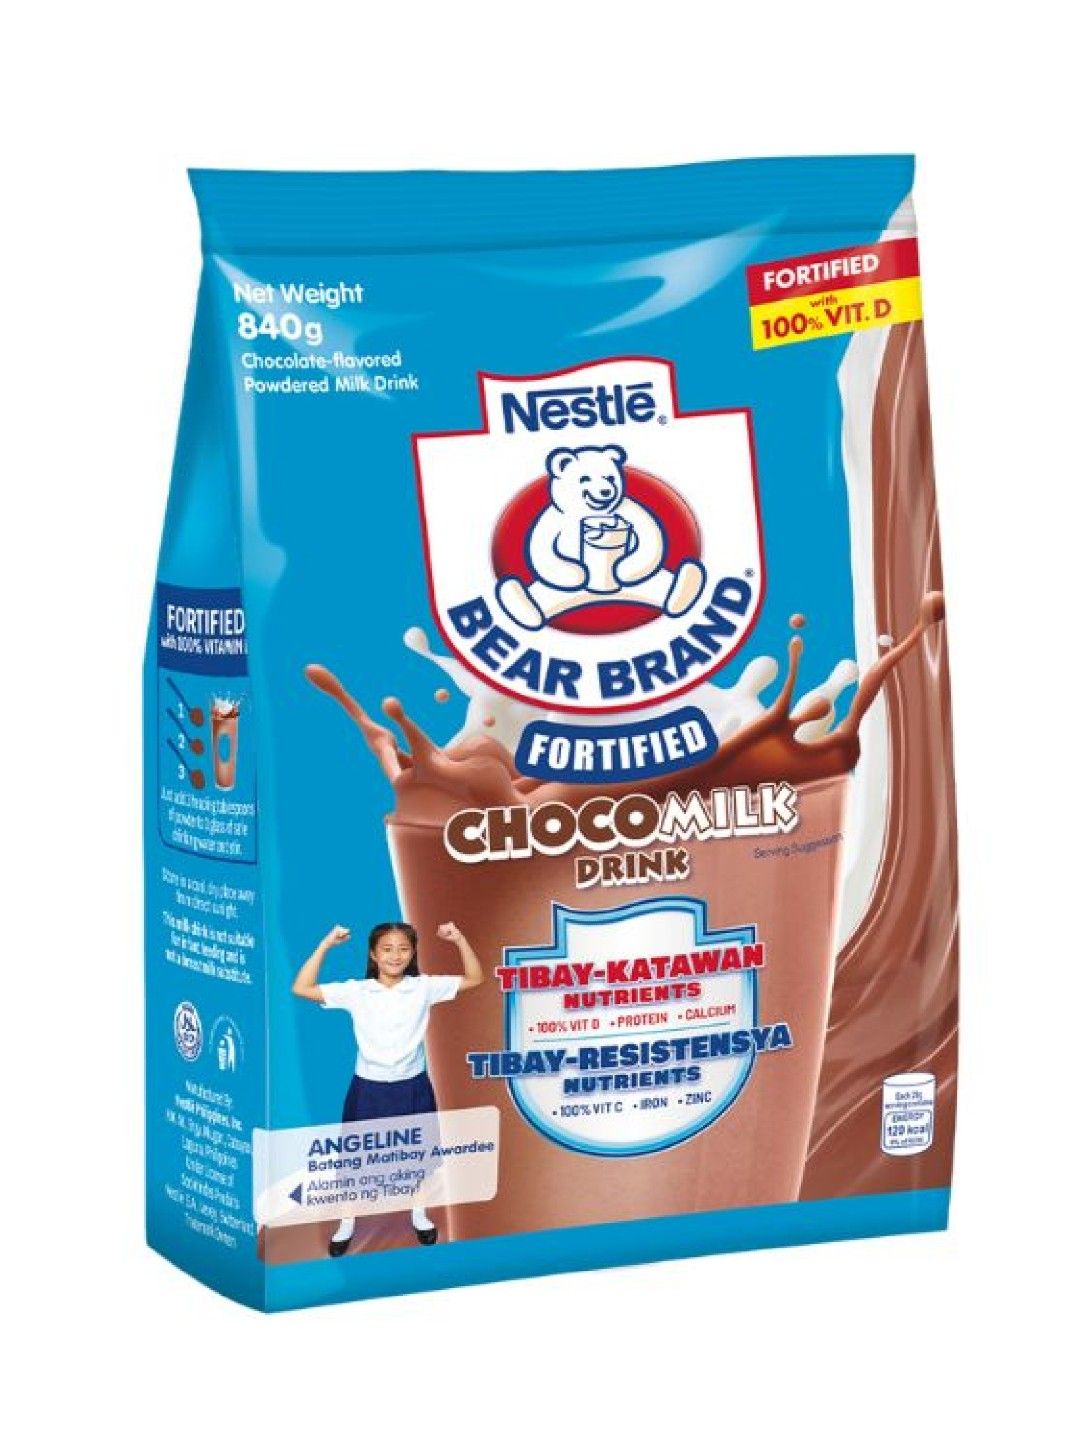 Bear Brand Fortified Choco Milk Drink (840g)